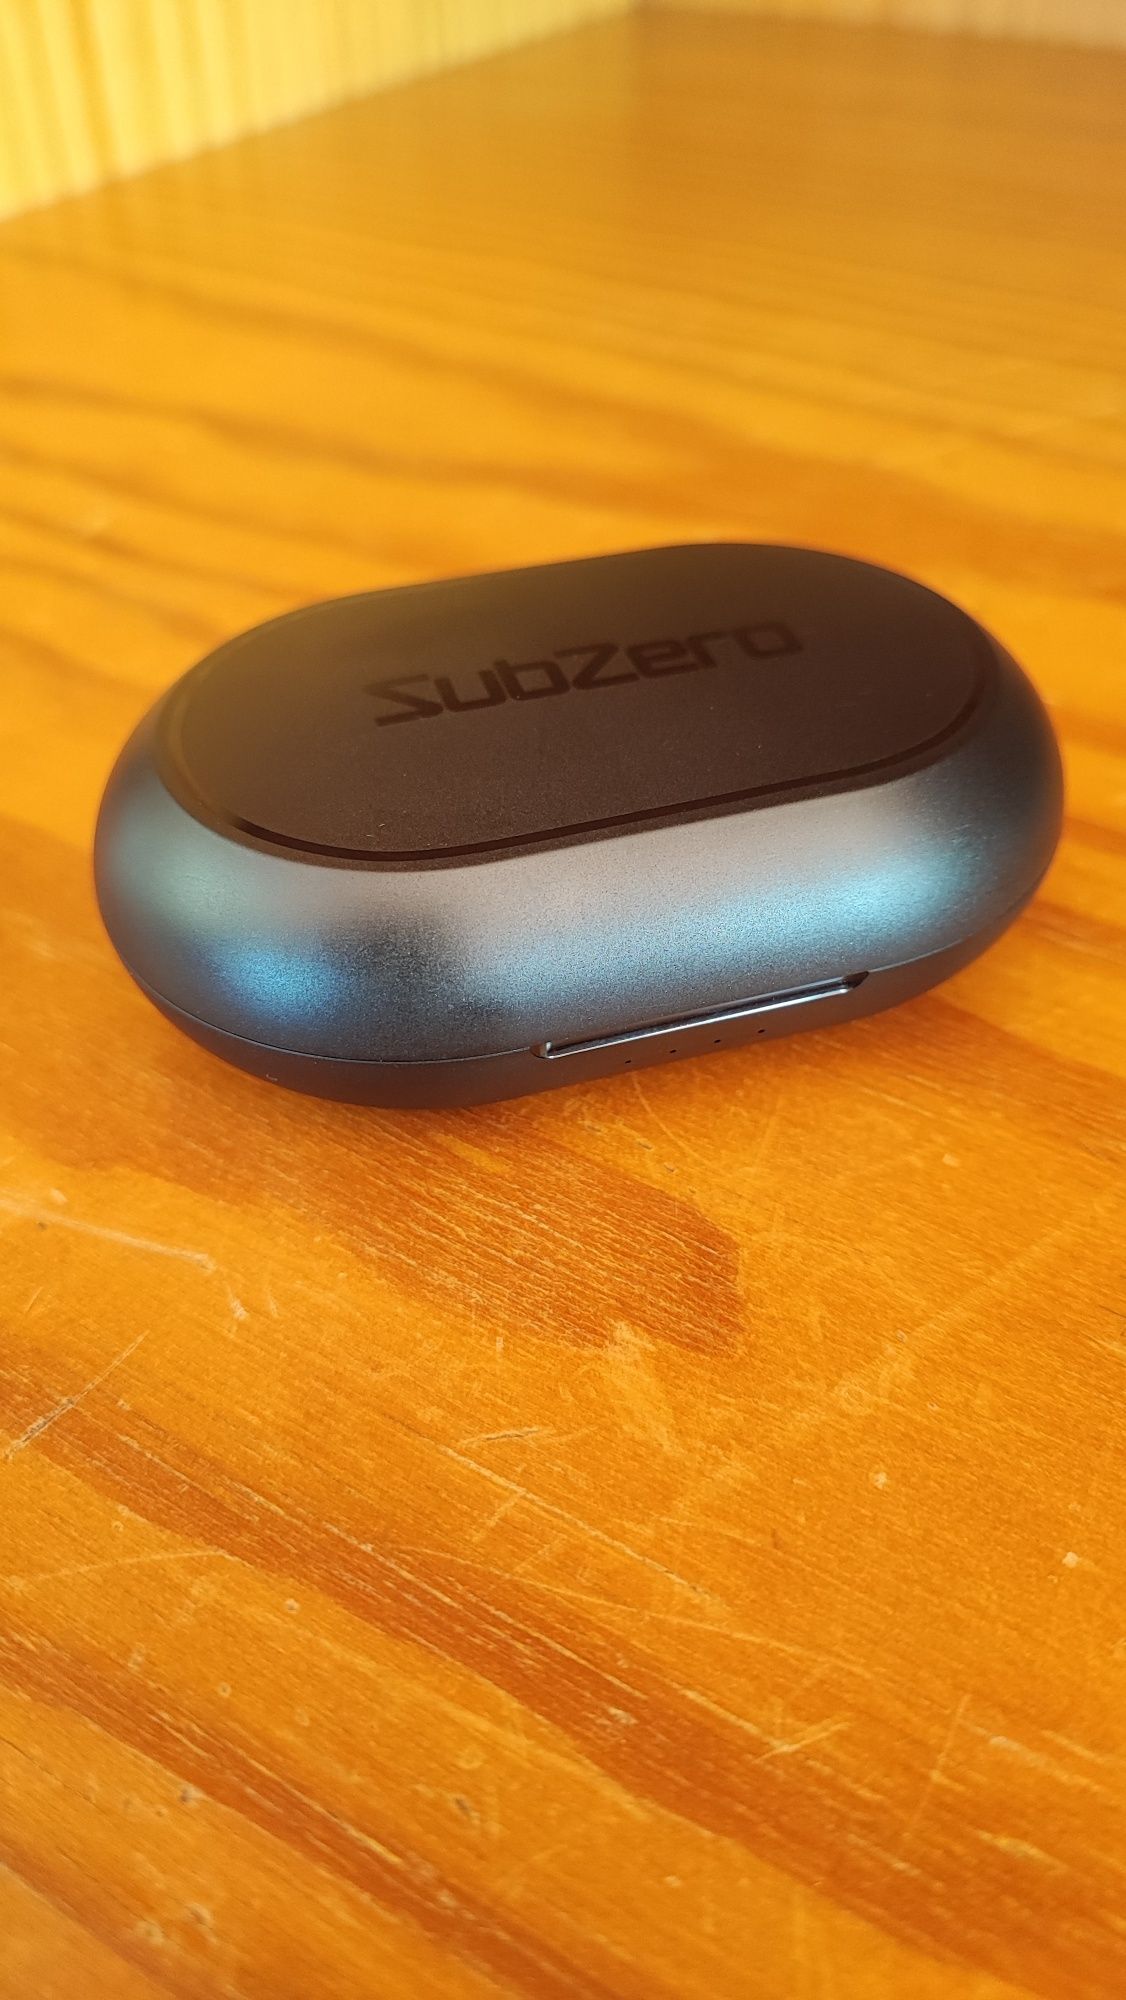 Subzero wireless lavalier